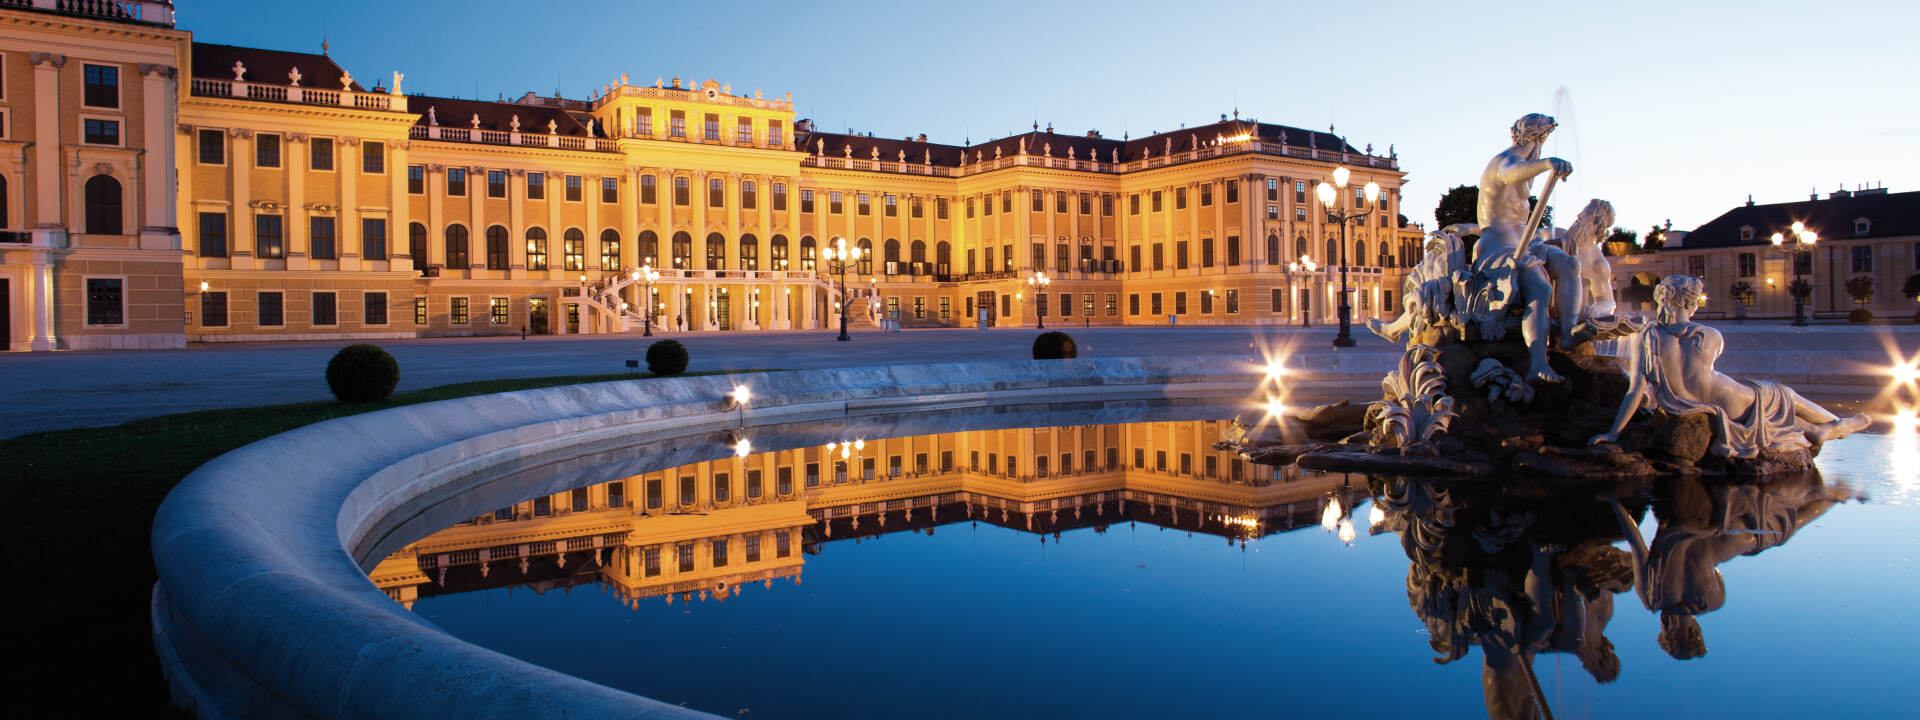 Schönbrunn Palace at night © WienTourismus | Peter Rigaud